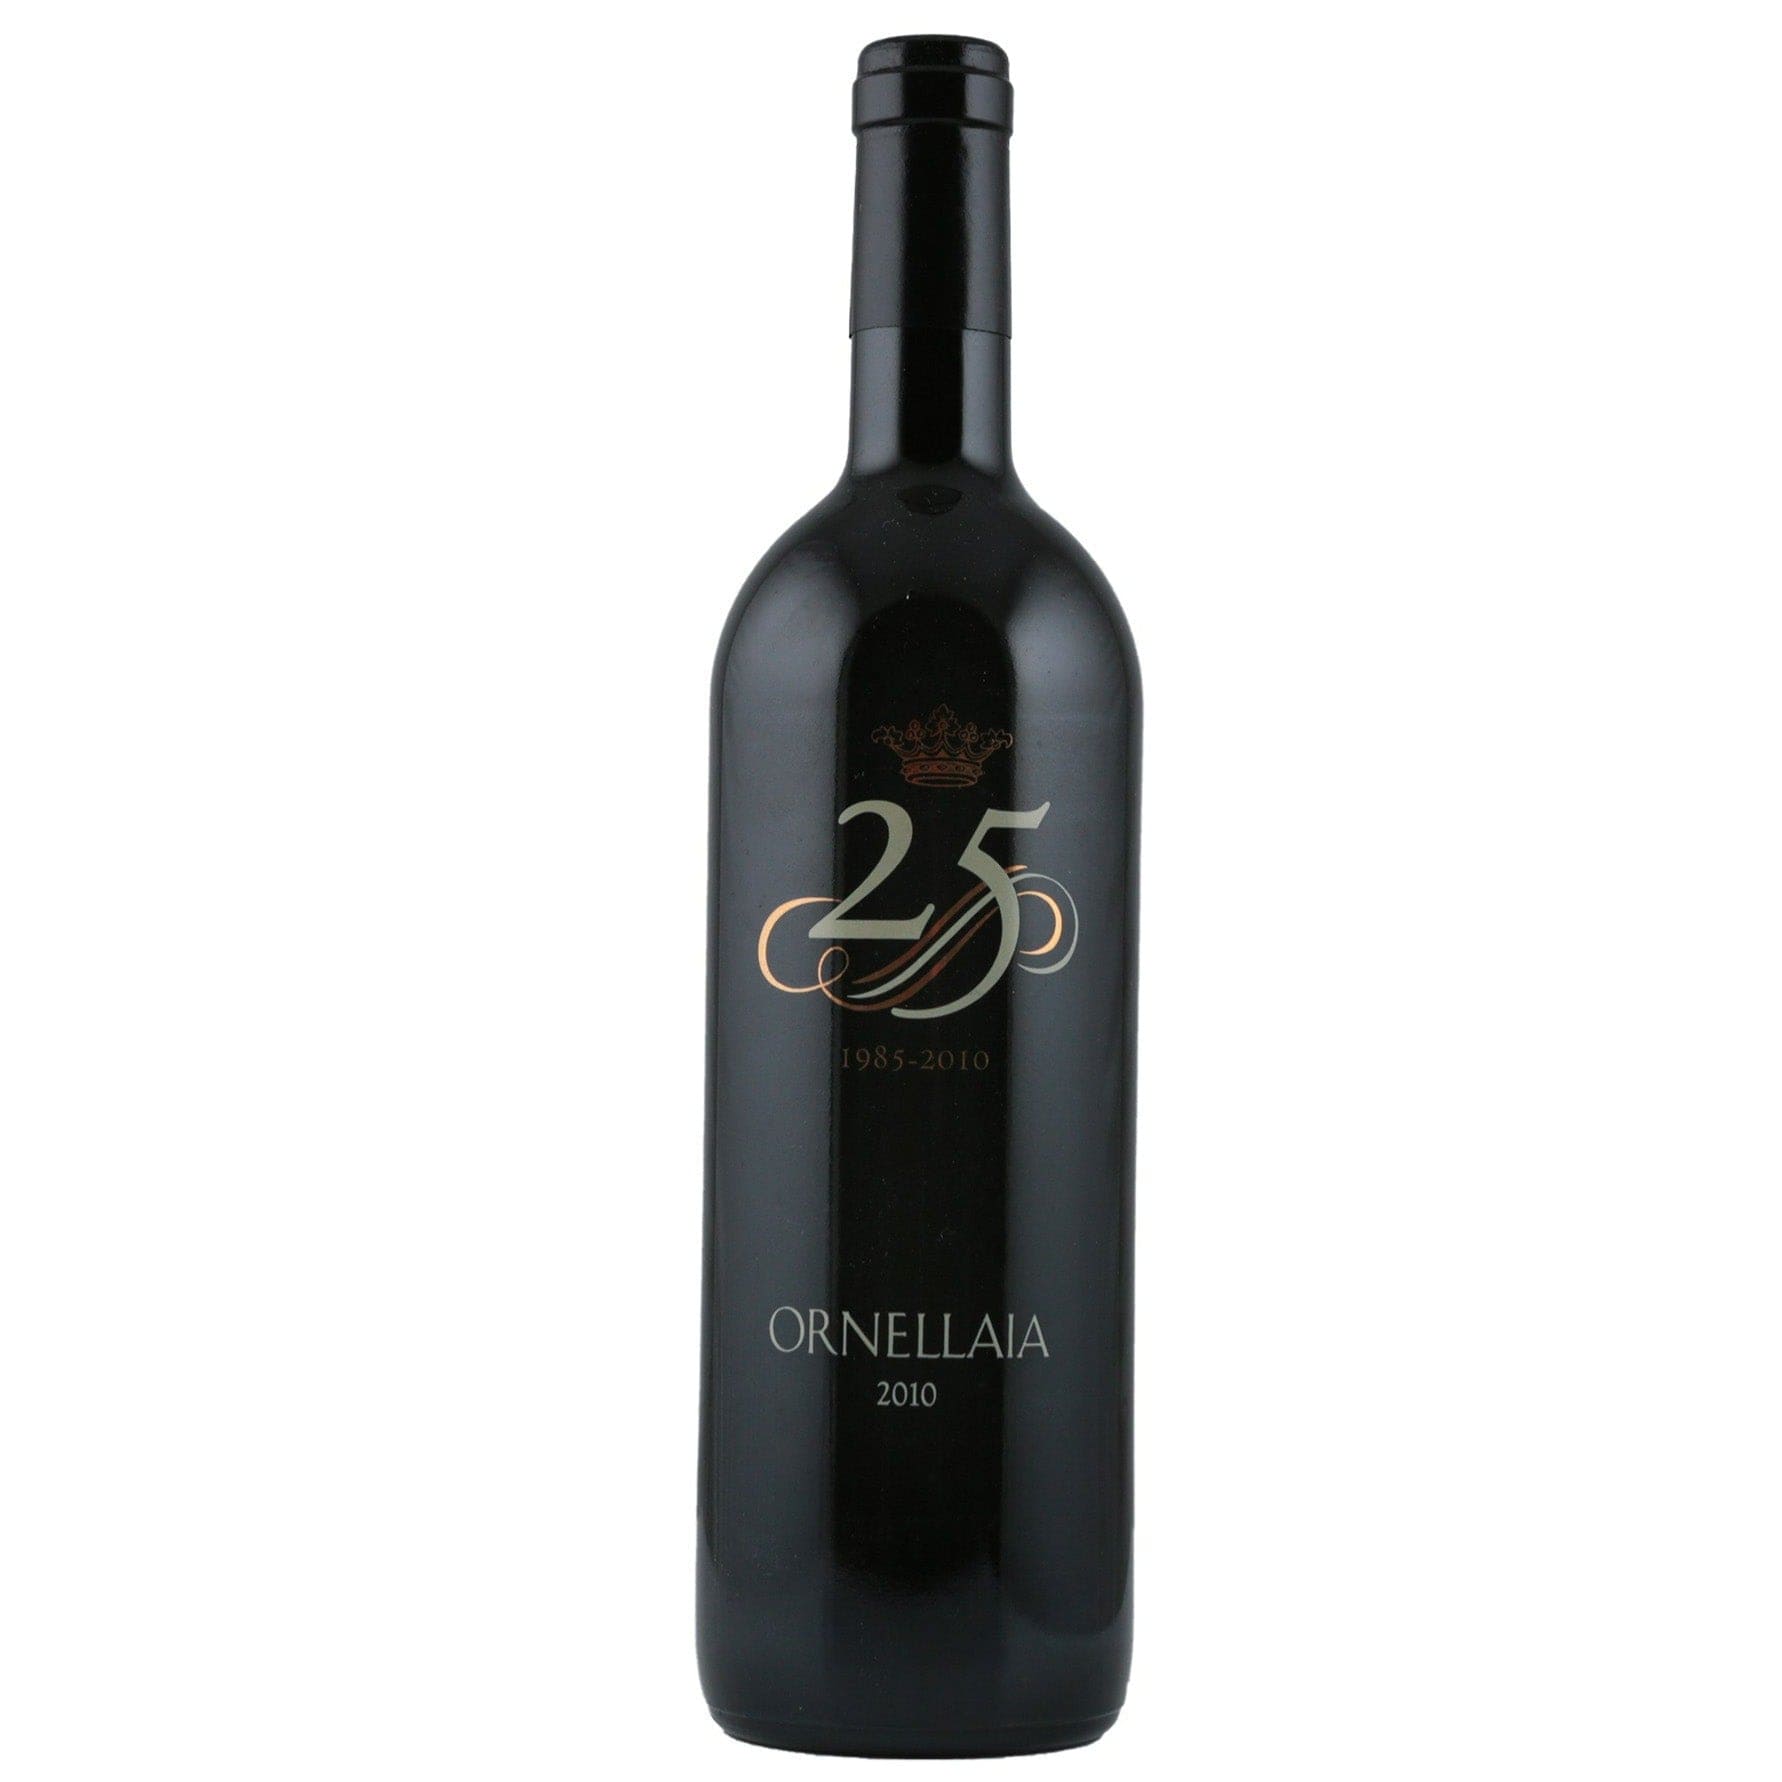 Single bottle of Red wine Ornellaia, Bolgheri Superiore, Bolgheri, 2010 53% Cabernet Sauvignon, 39% Merlot, 4% Cabernet Franc & 4% Petit Verdot